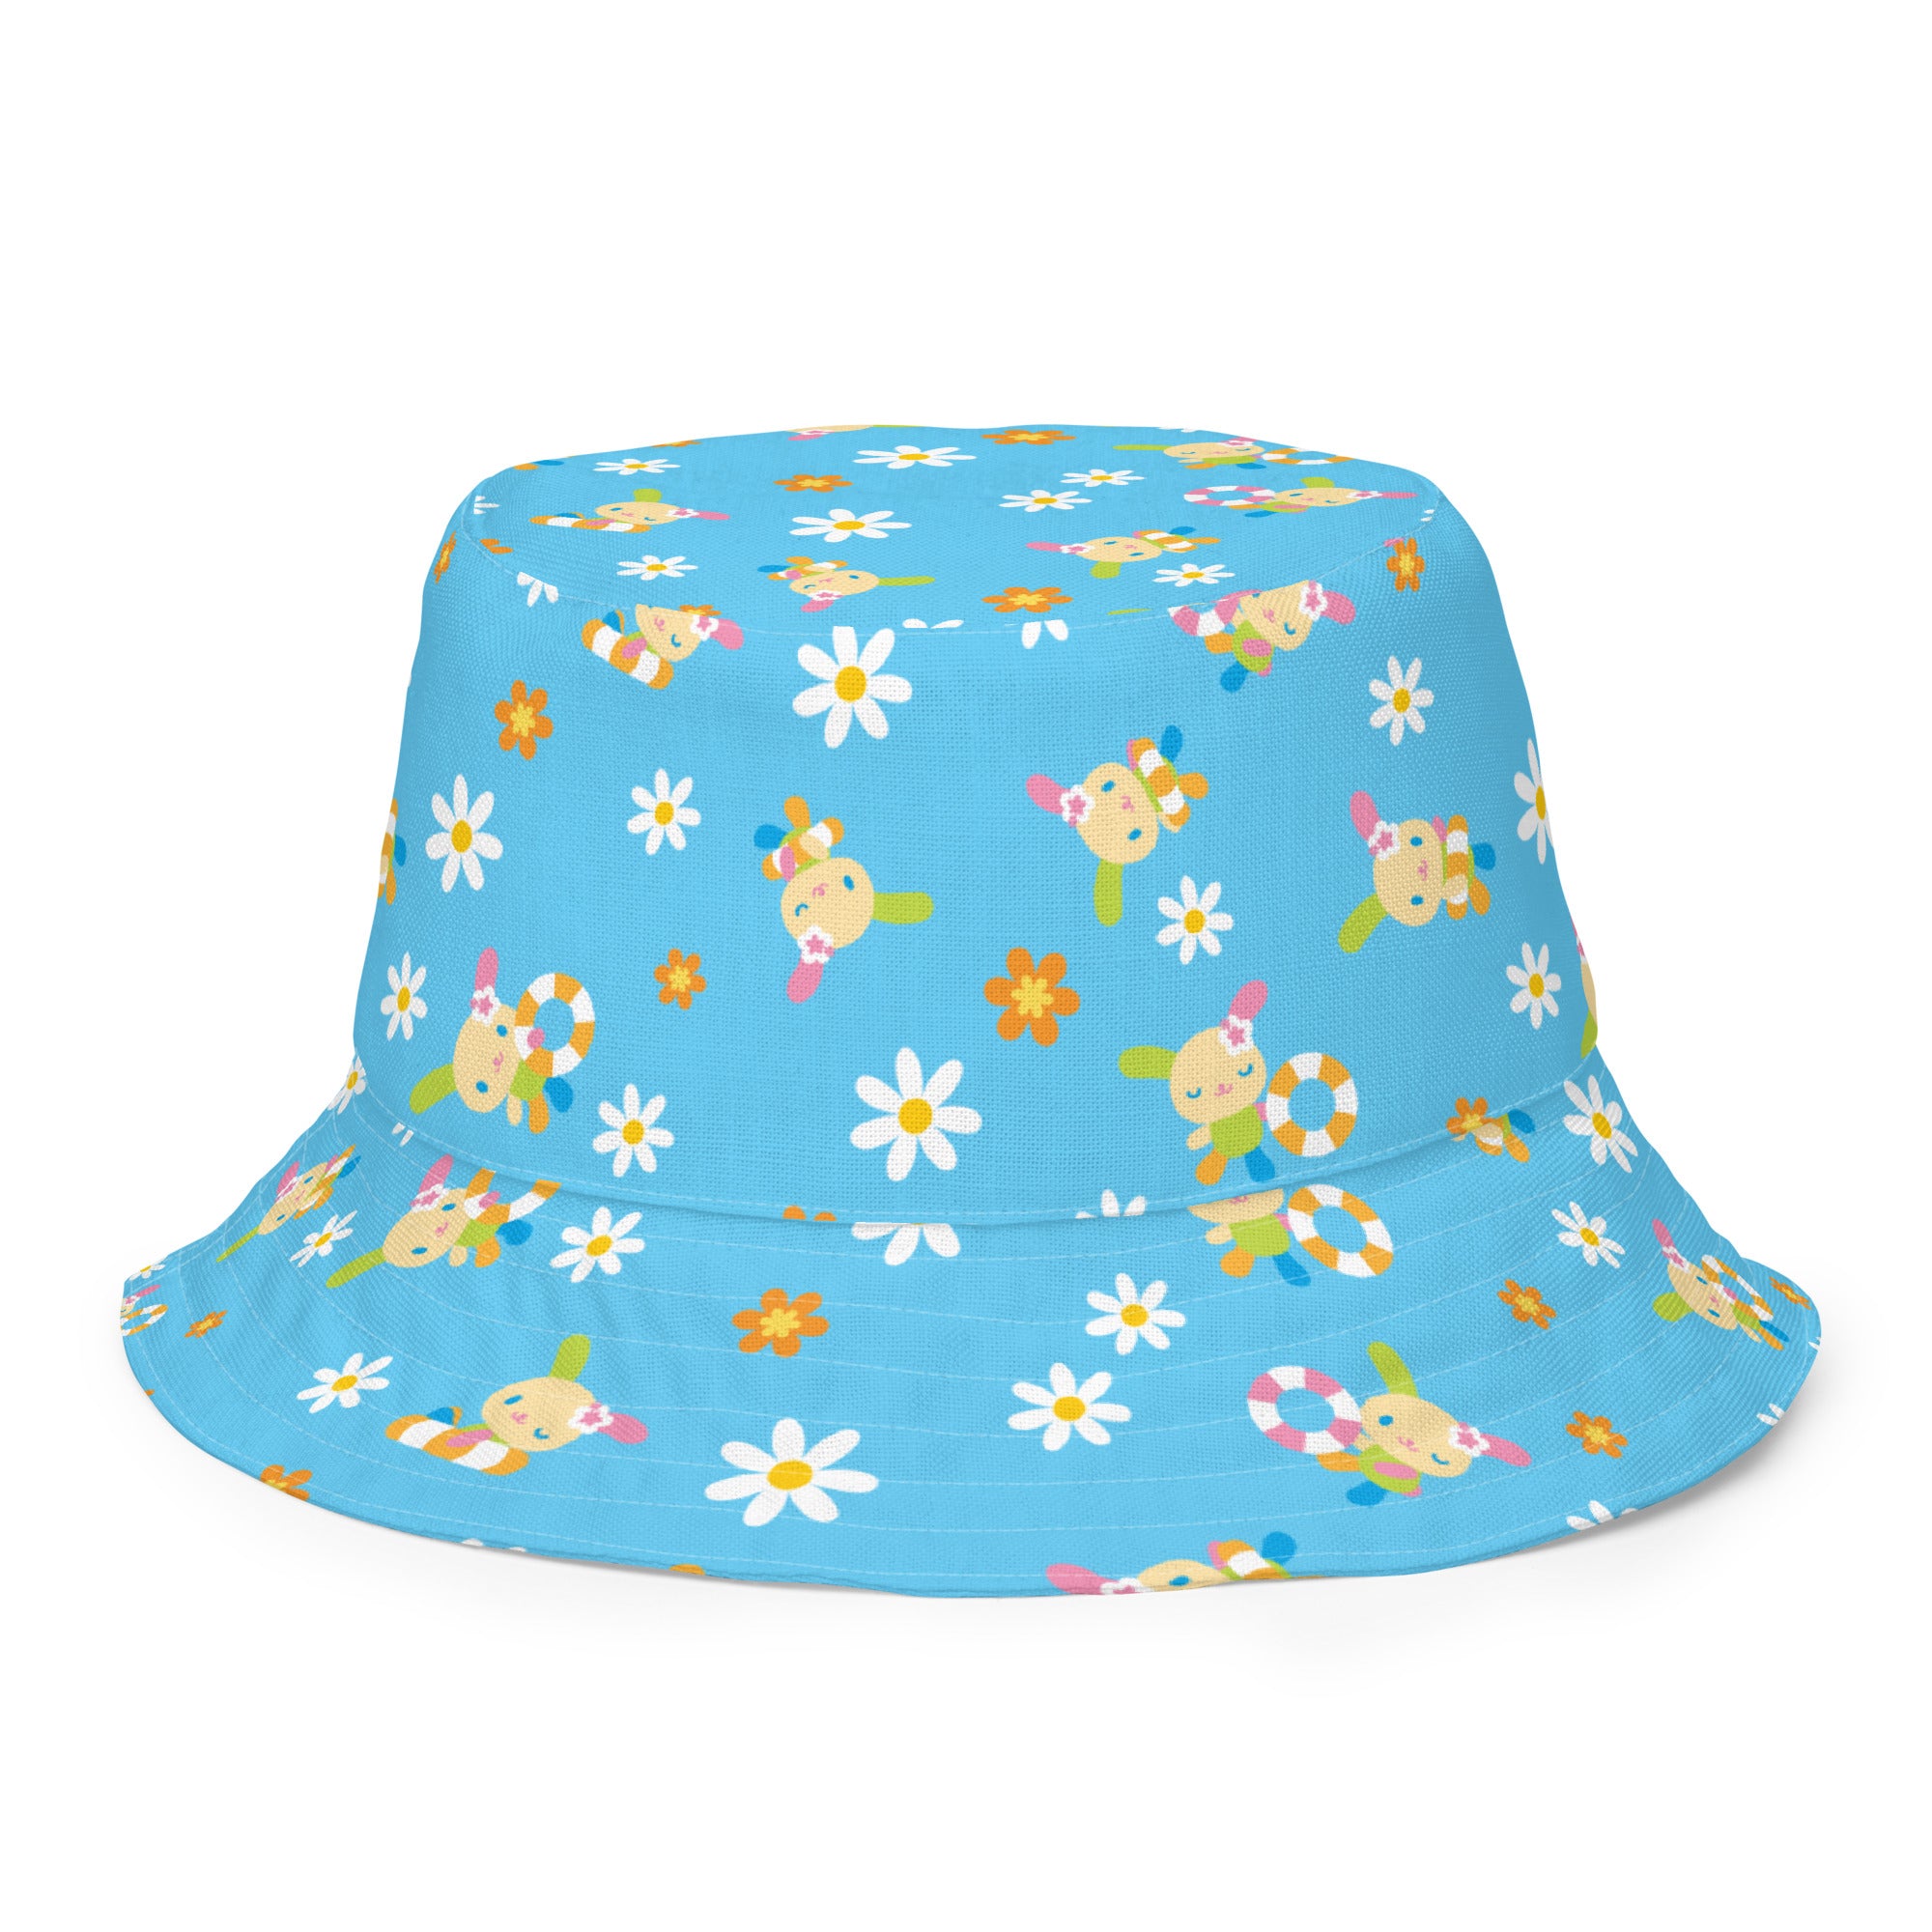 U*SA*HA*NA Pool Party Reversible Bucket Hat Accessory Printful S/M  